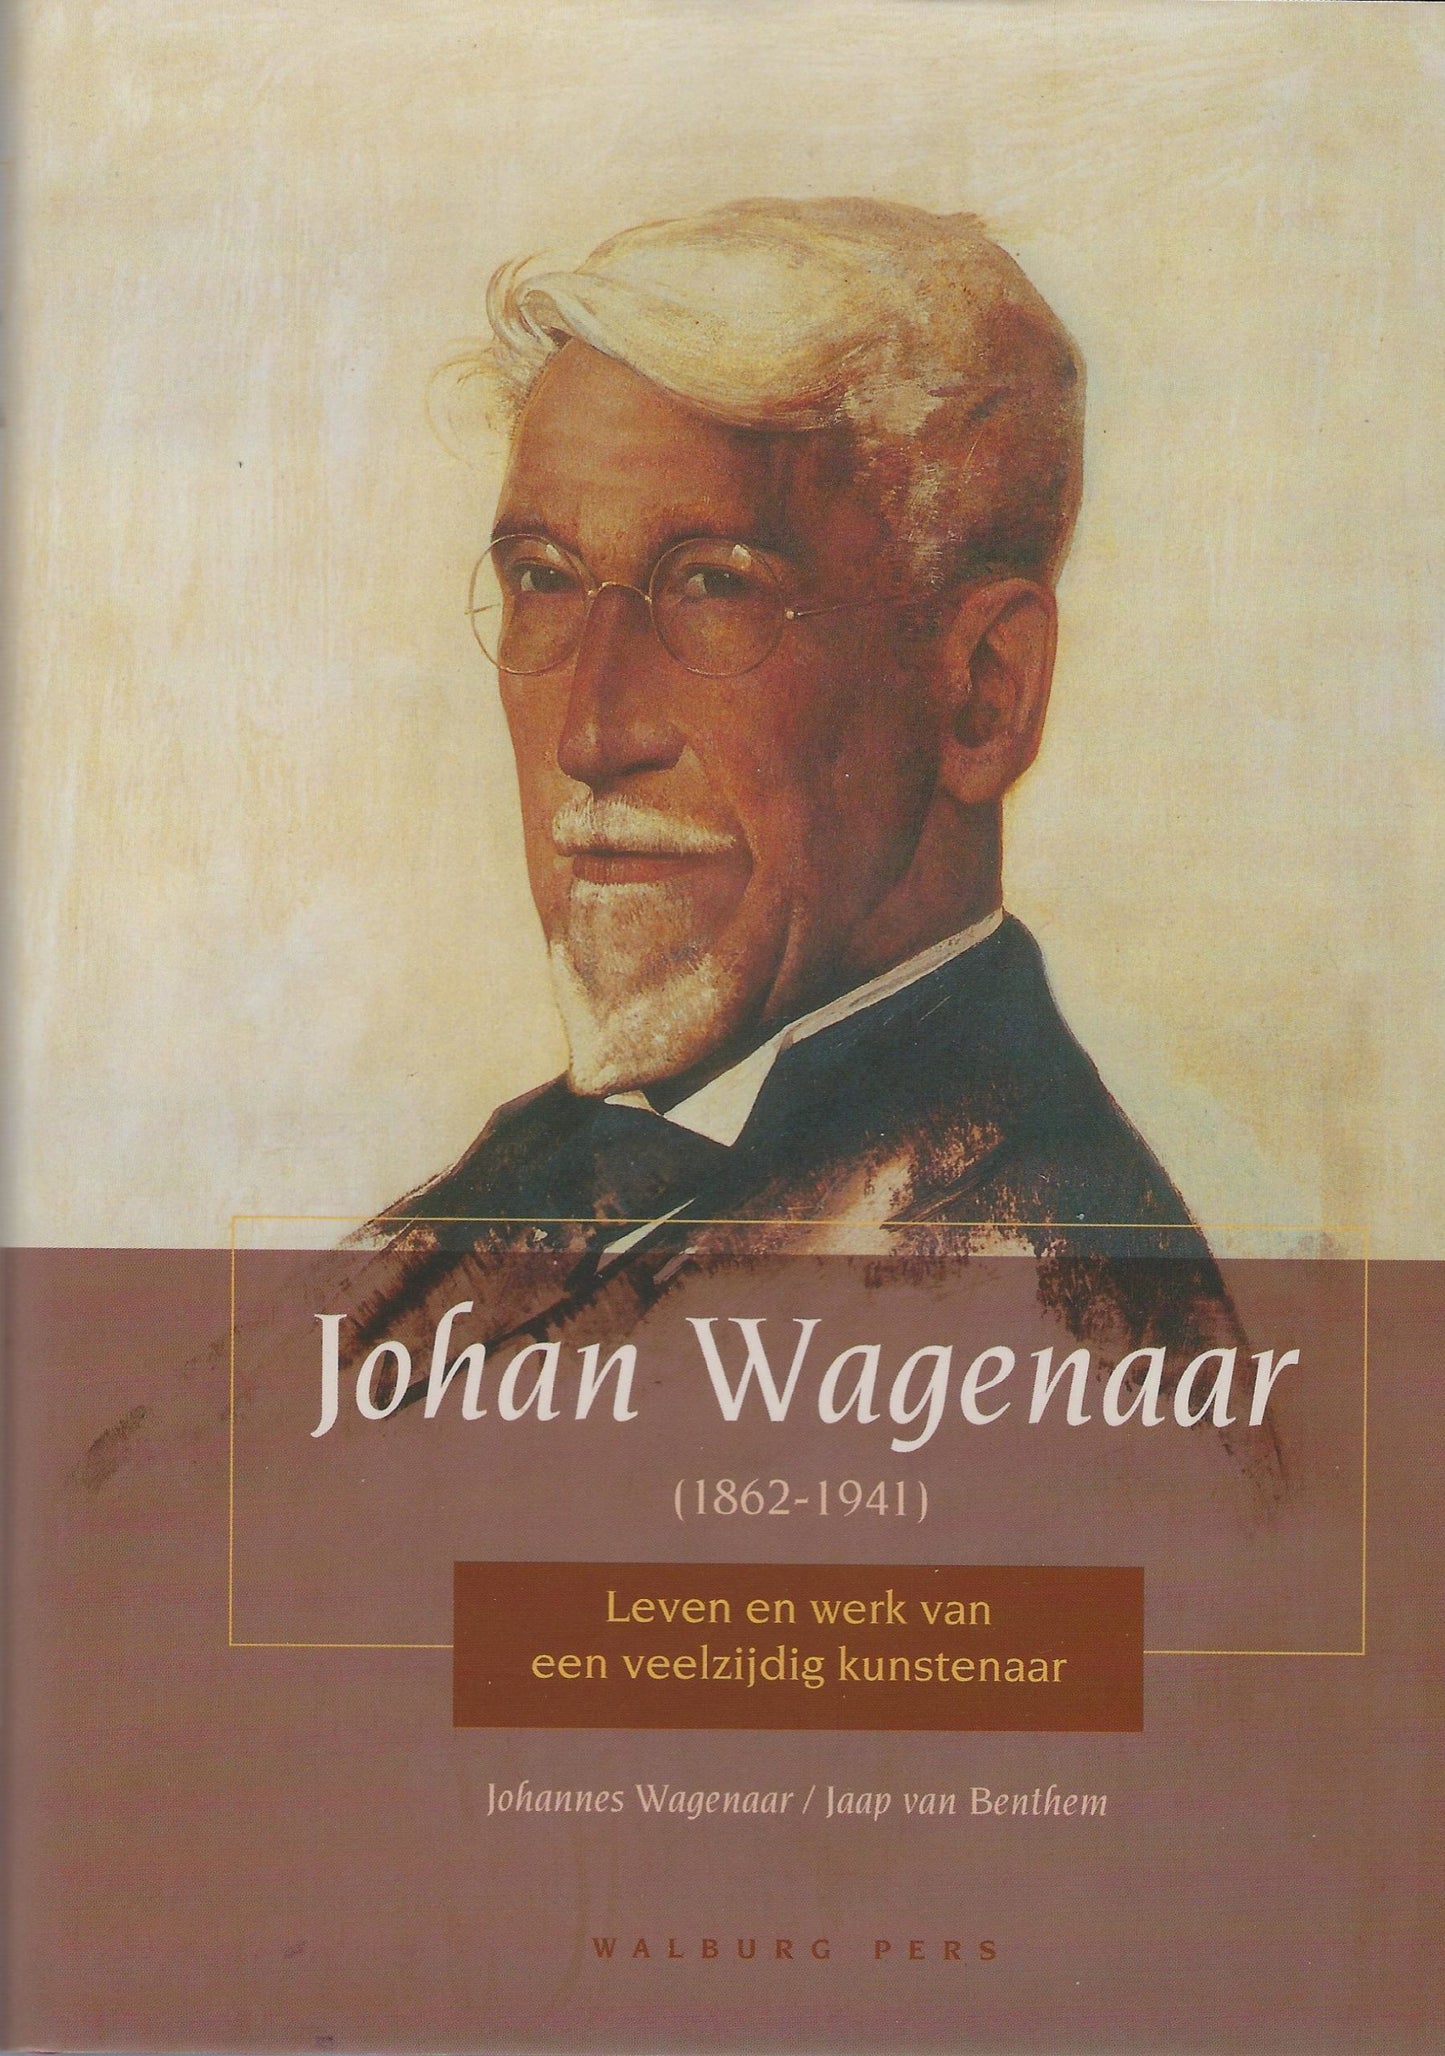 Johan Wagenaar (1862-1941)